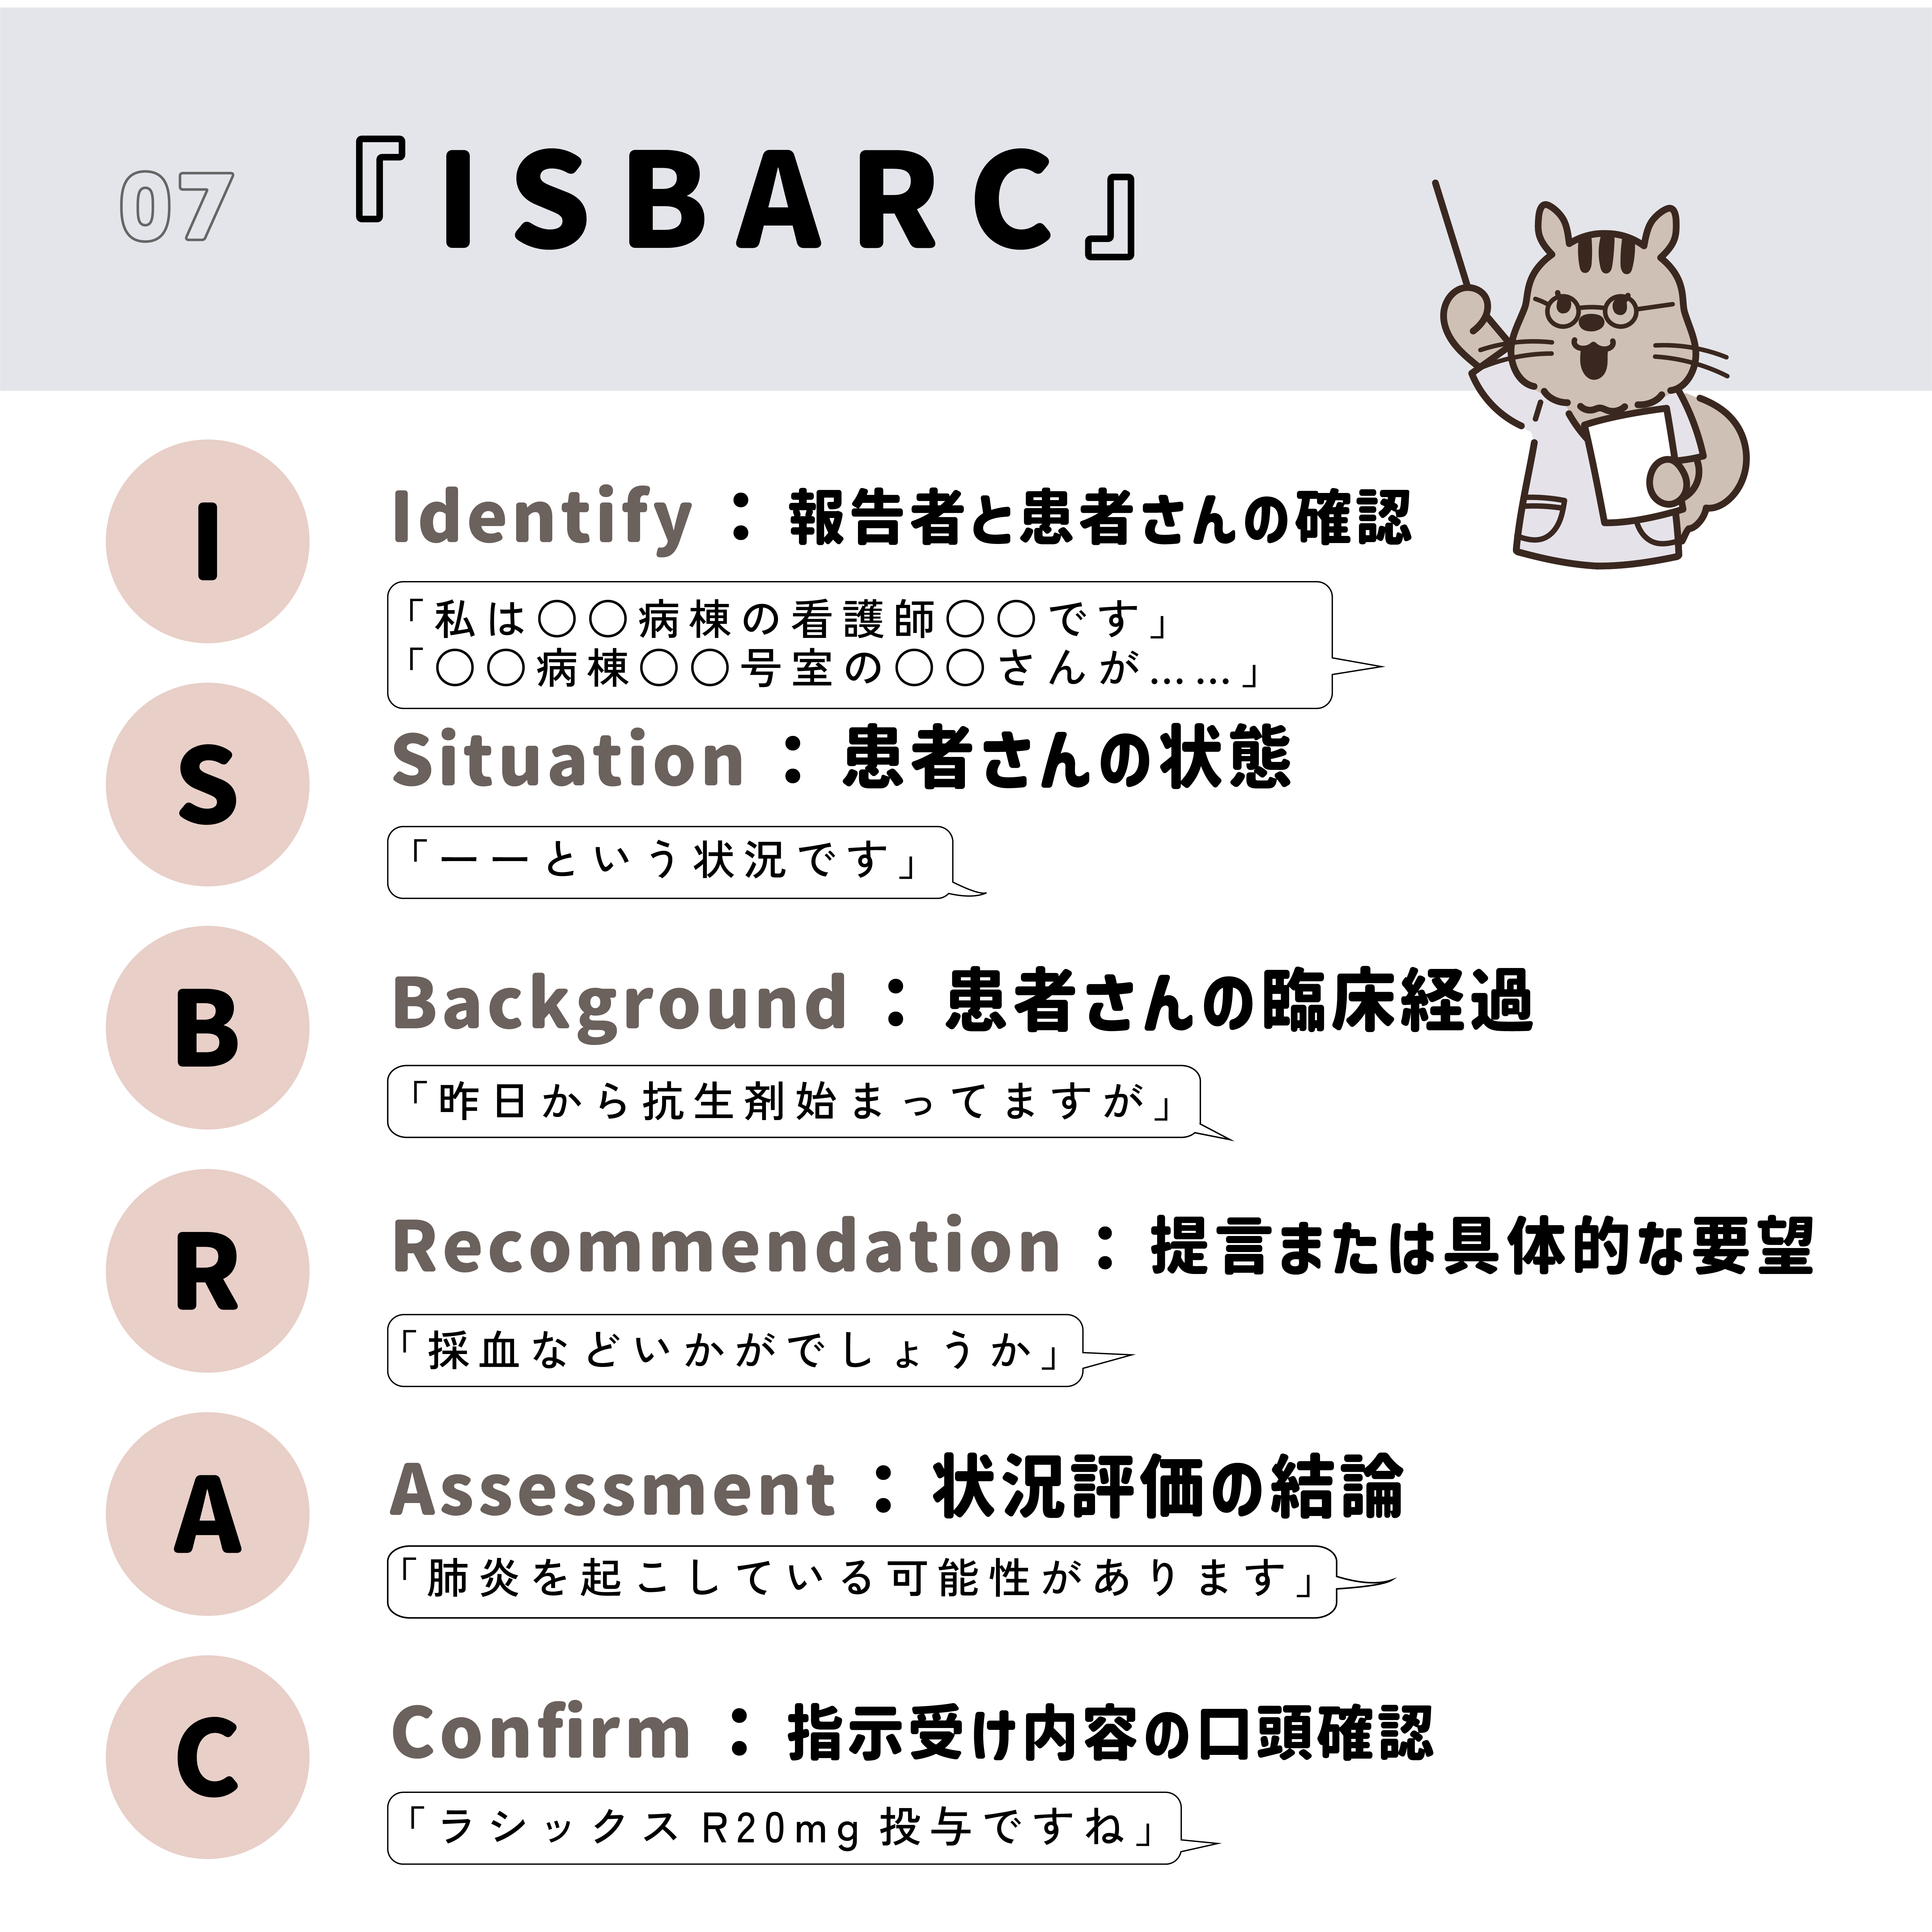 07『ISBARC』。Identify：報告者と患者さんの確認。Situation：患者さんの状態。Background：患者さんの臨床経過。Recommendation：提言または具体的な要望。Assessment：状況評価の結論。Confirm：指示受け内容の口頭確認